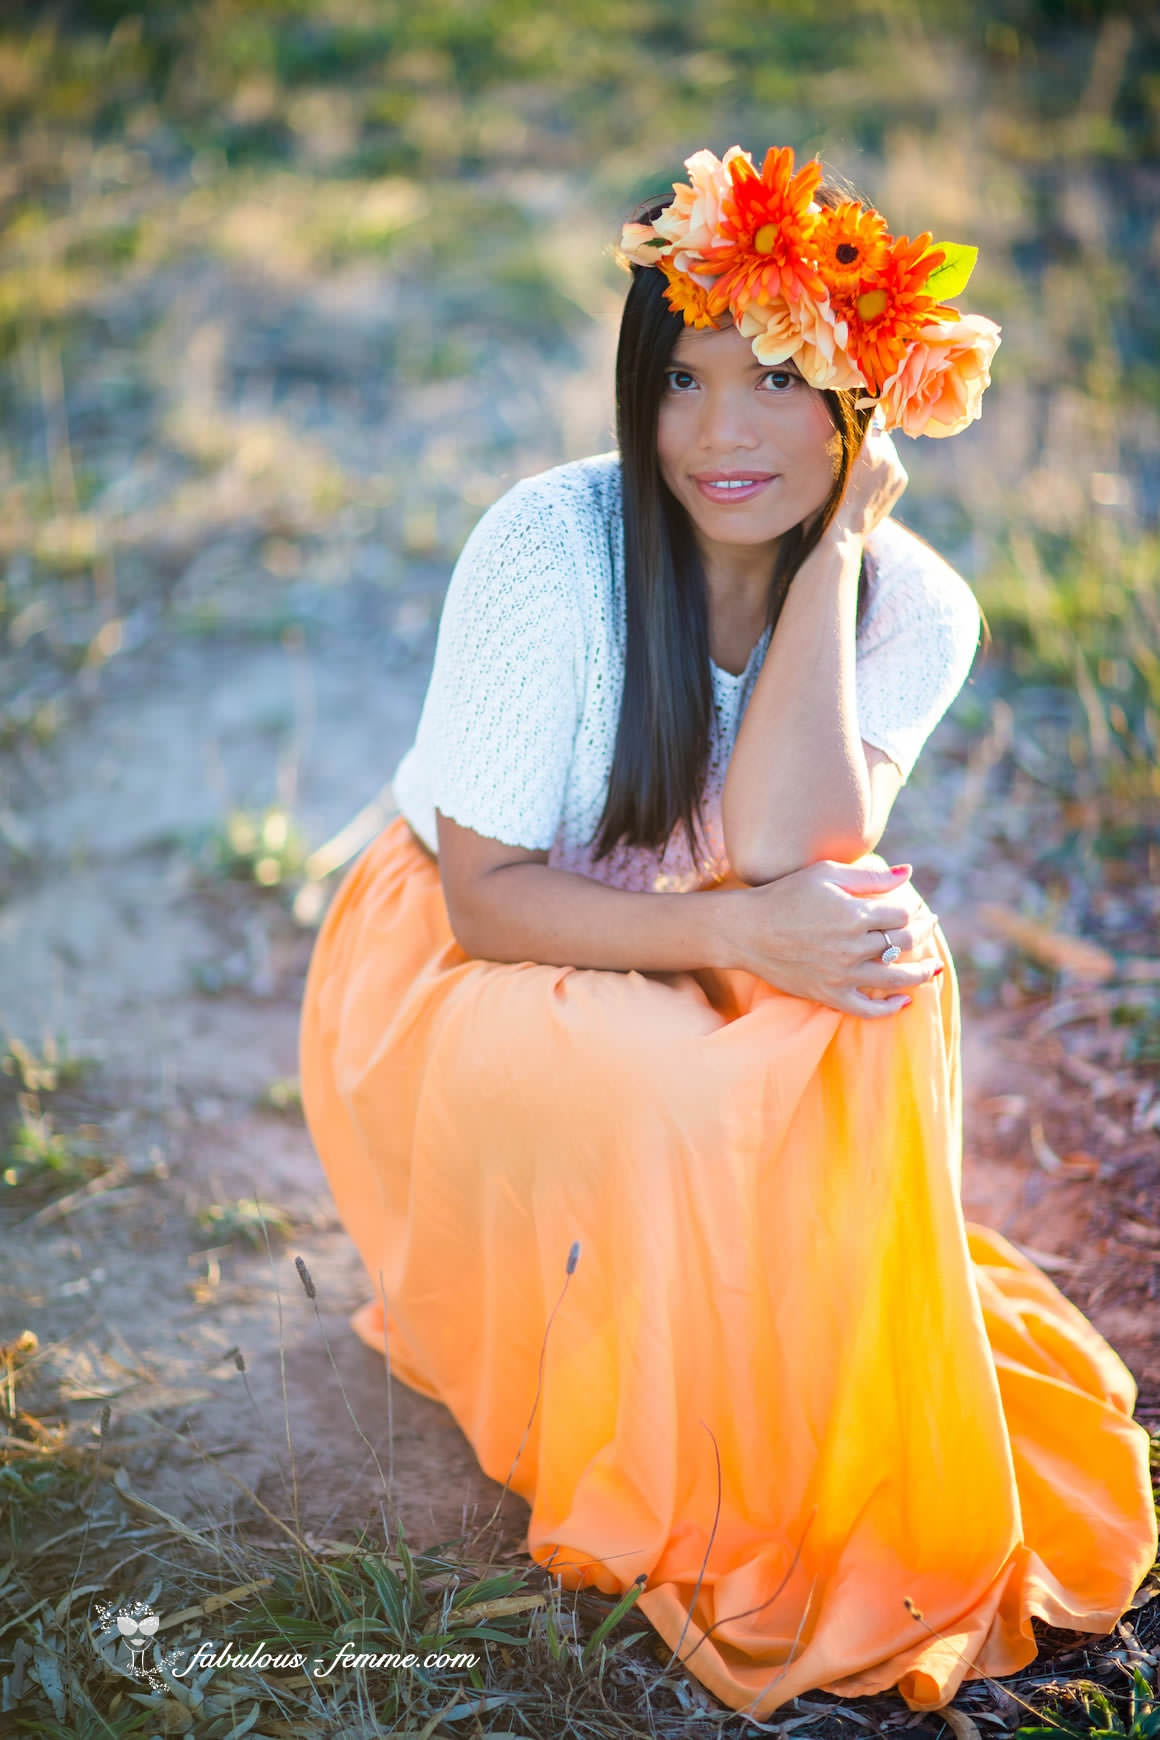 fashion photography - autumn - orange dress